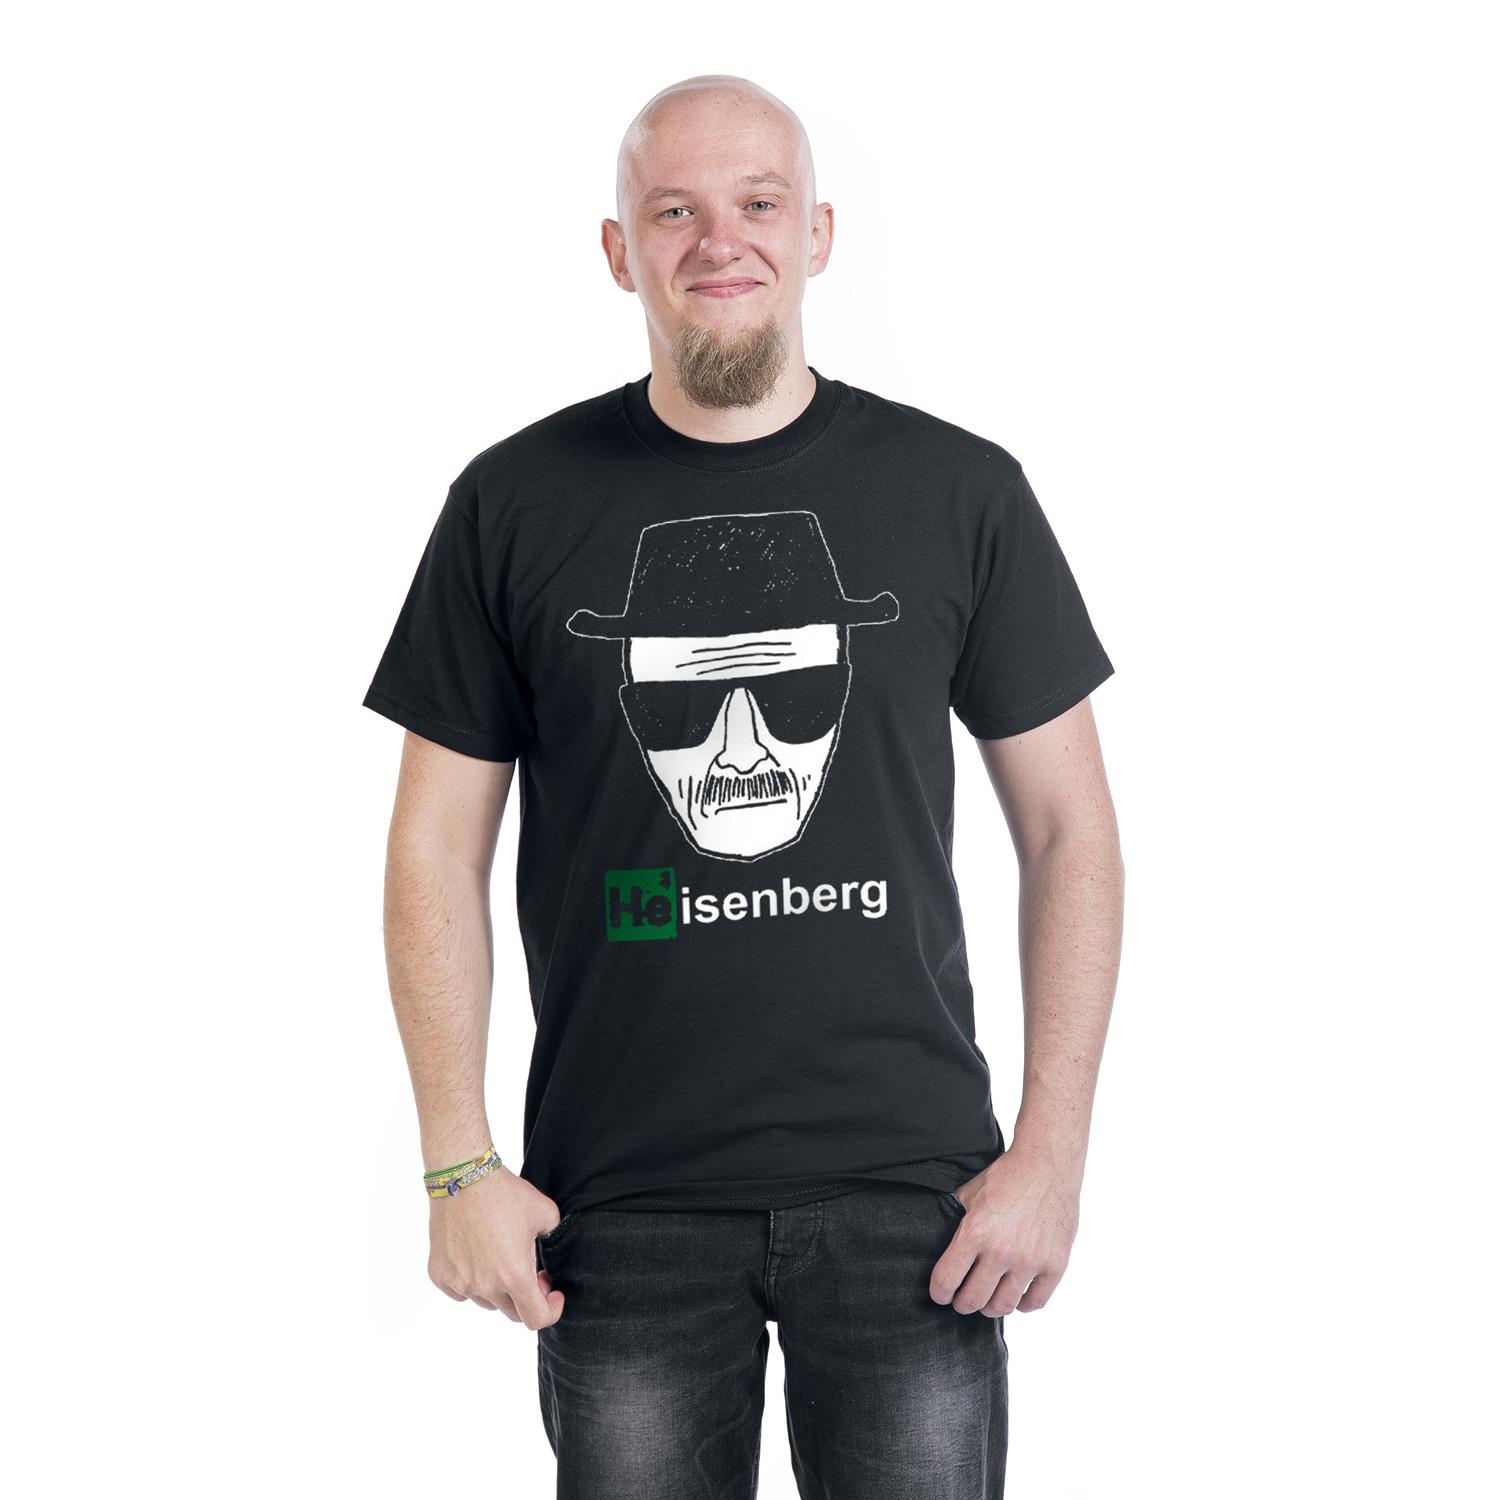 Heisenberg T-shirt Design t-shirt